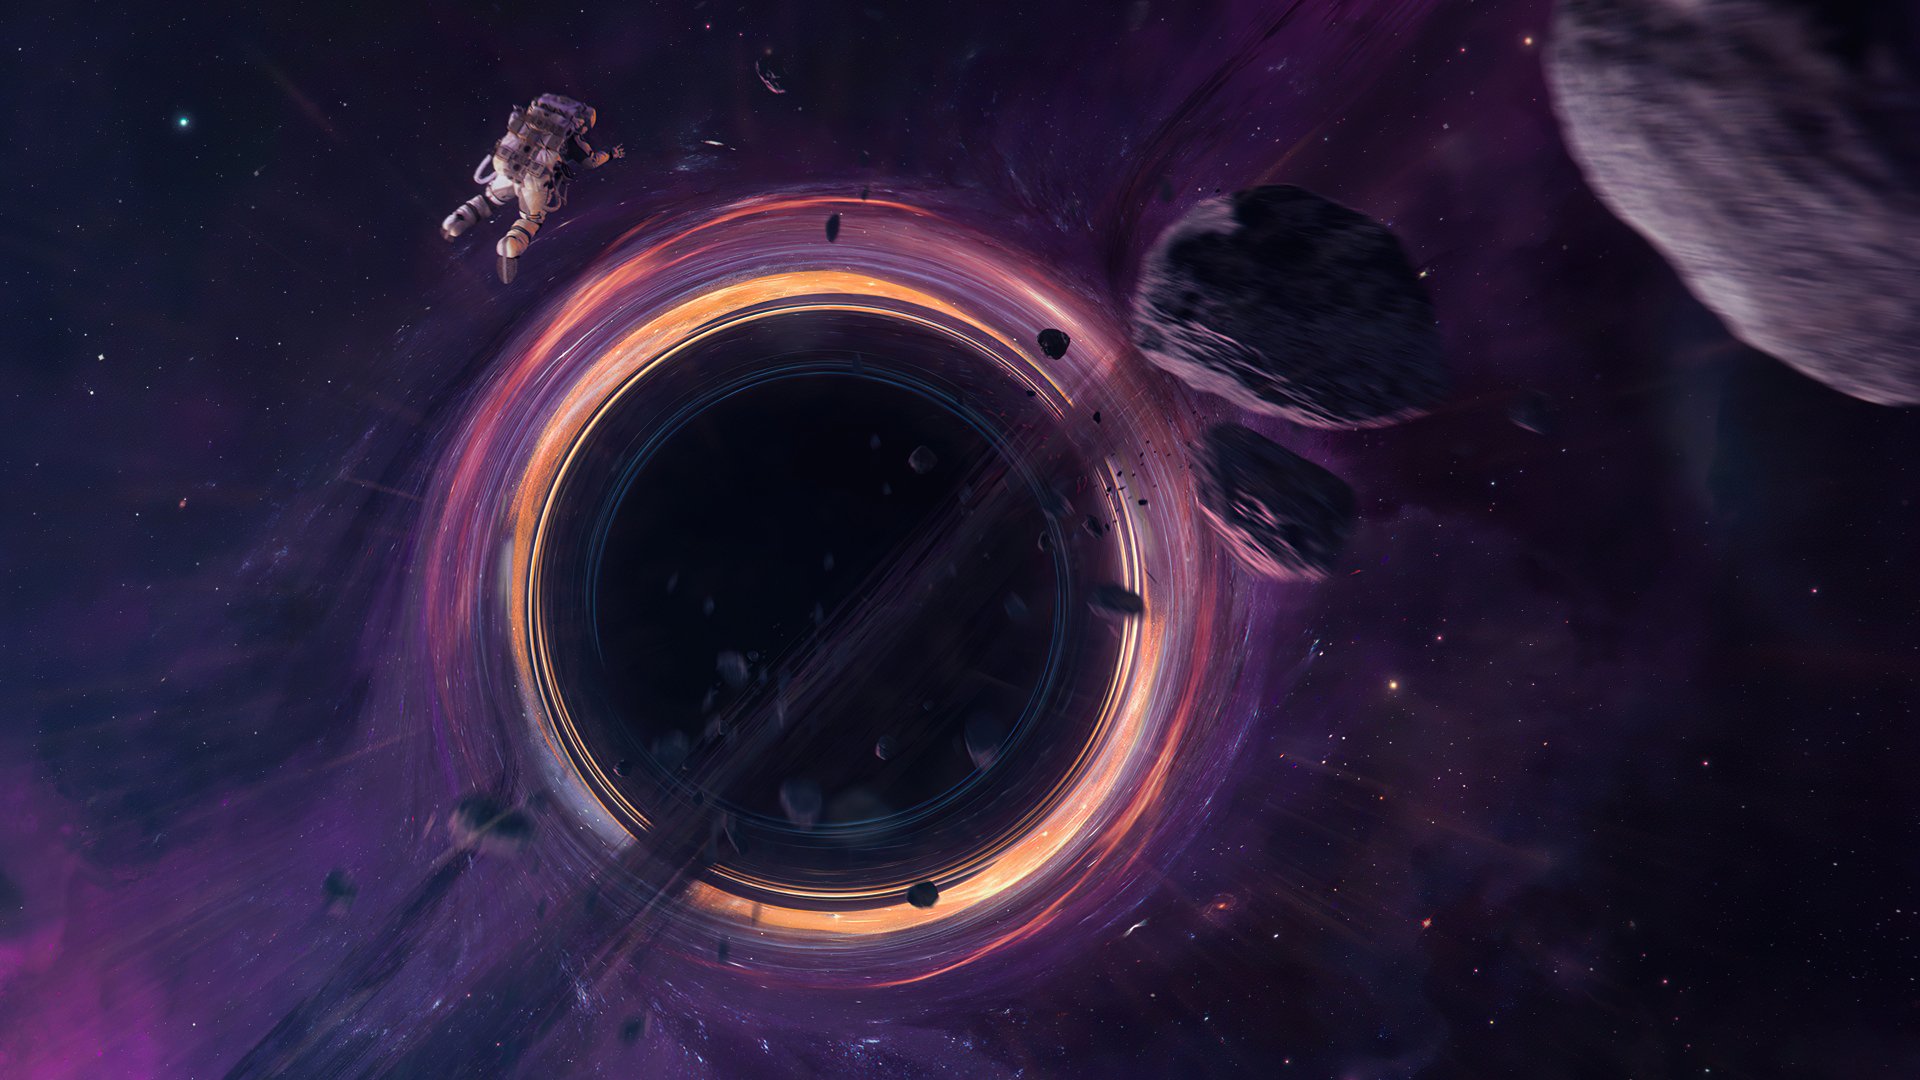 Cosmic Odyssey in 4K - Astronaut Adventure by Tobias Roetsch